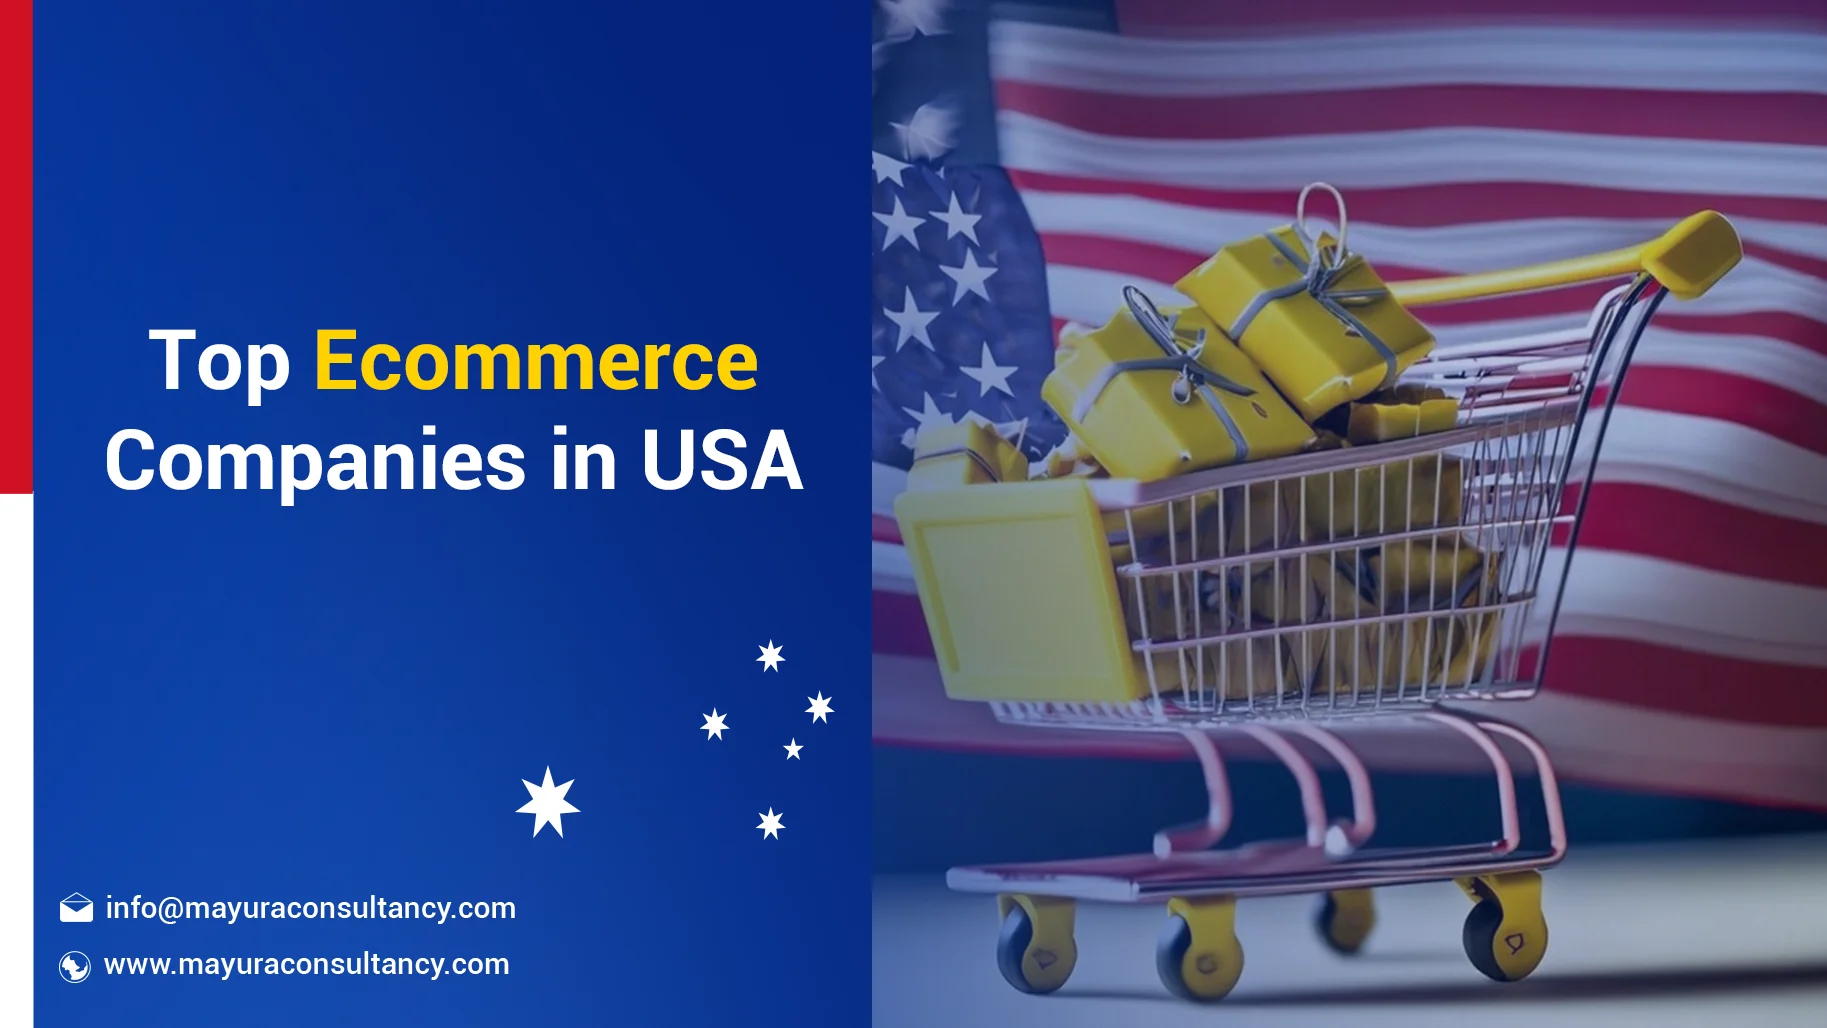 Top E-commerce Companies in USA